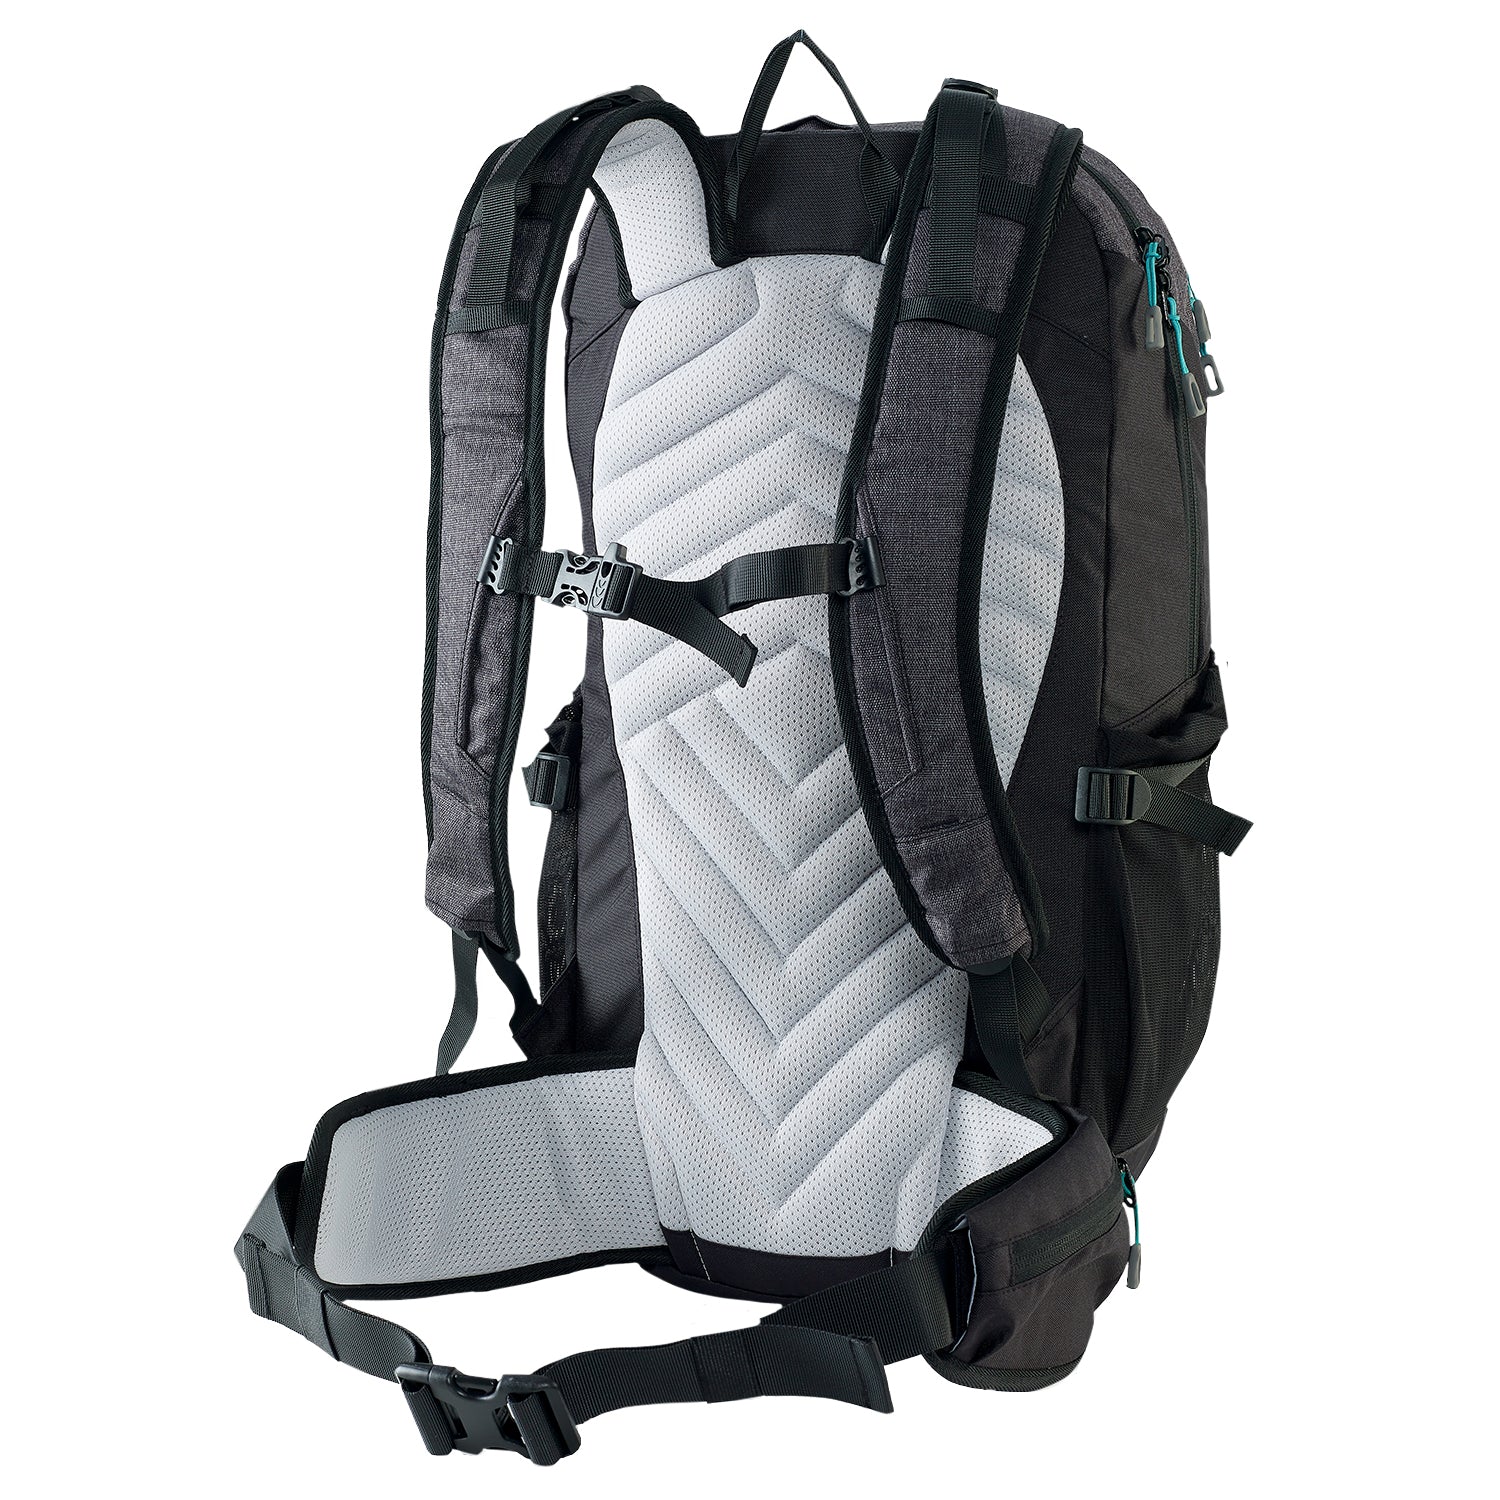 Caribee Triple Peak 34 backpack black harness